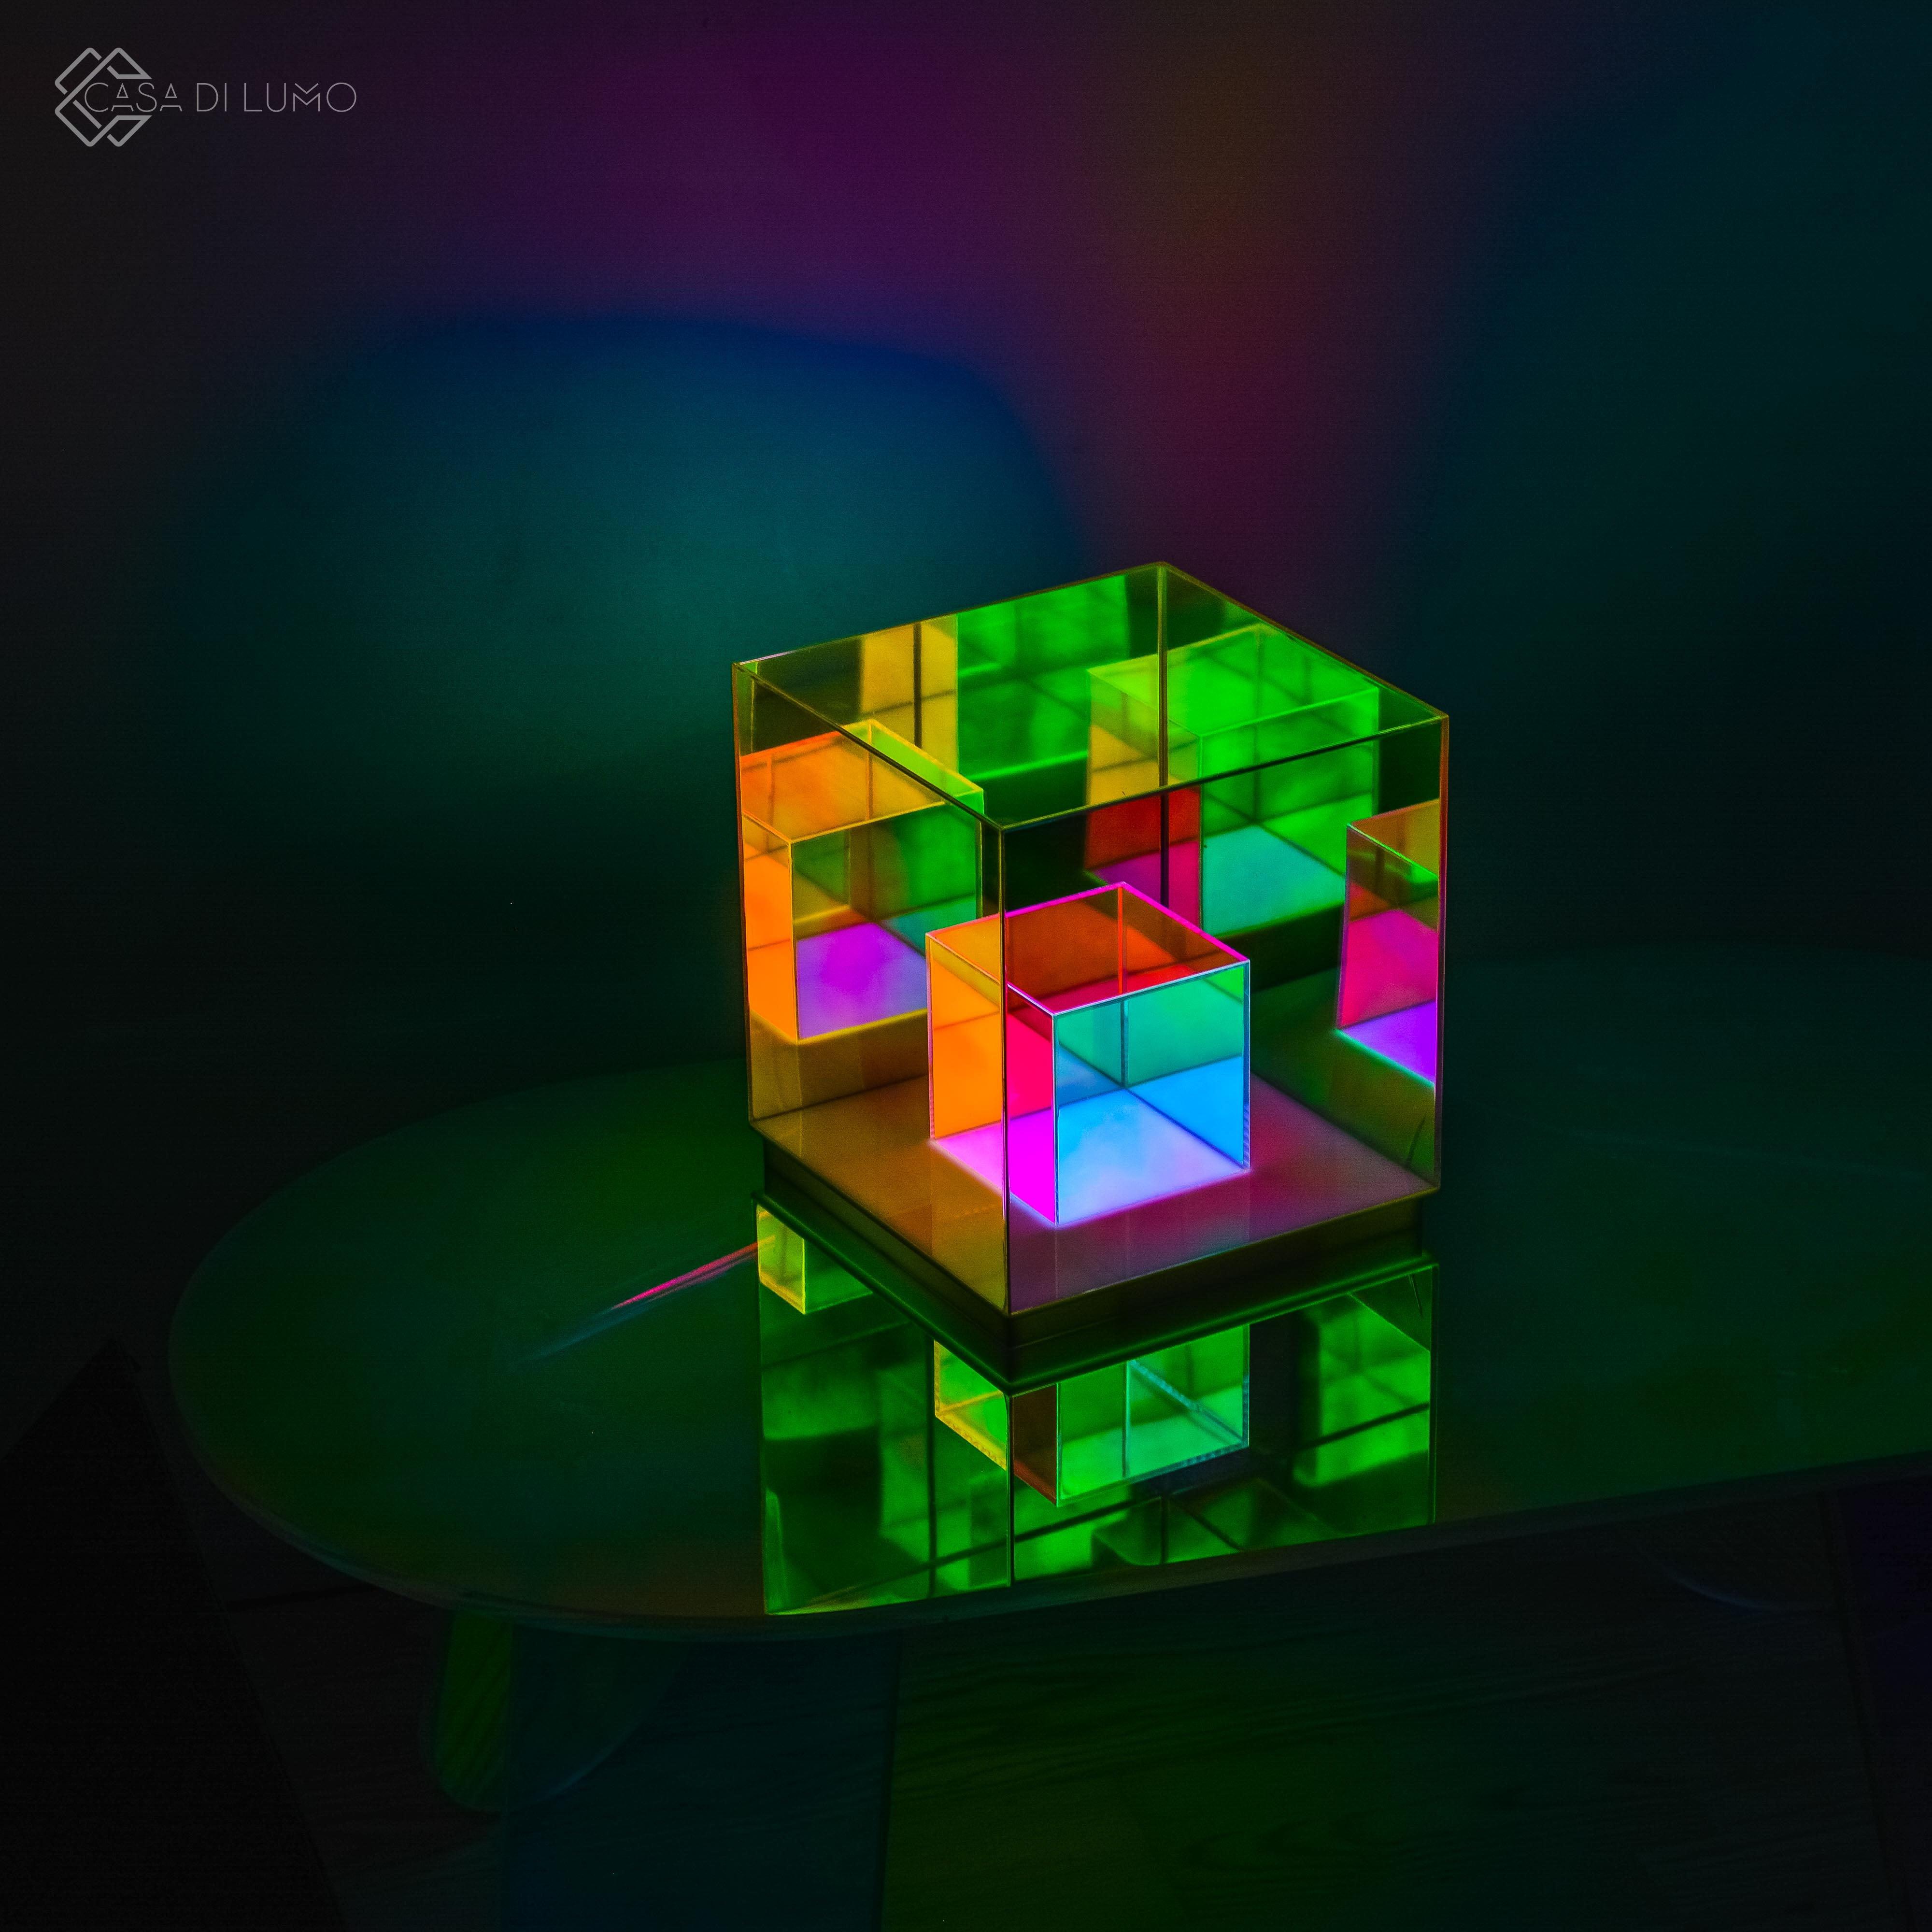 Infinity Cube - Casa Di Lumo